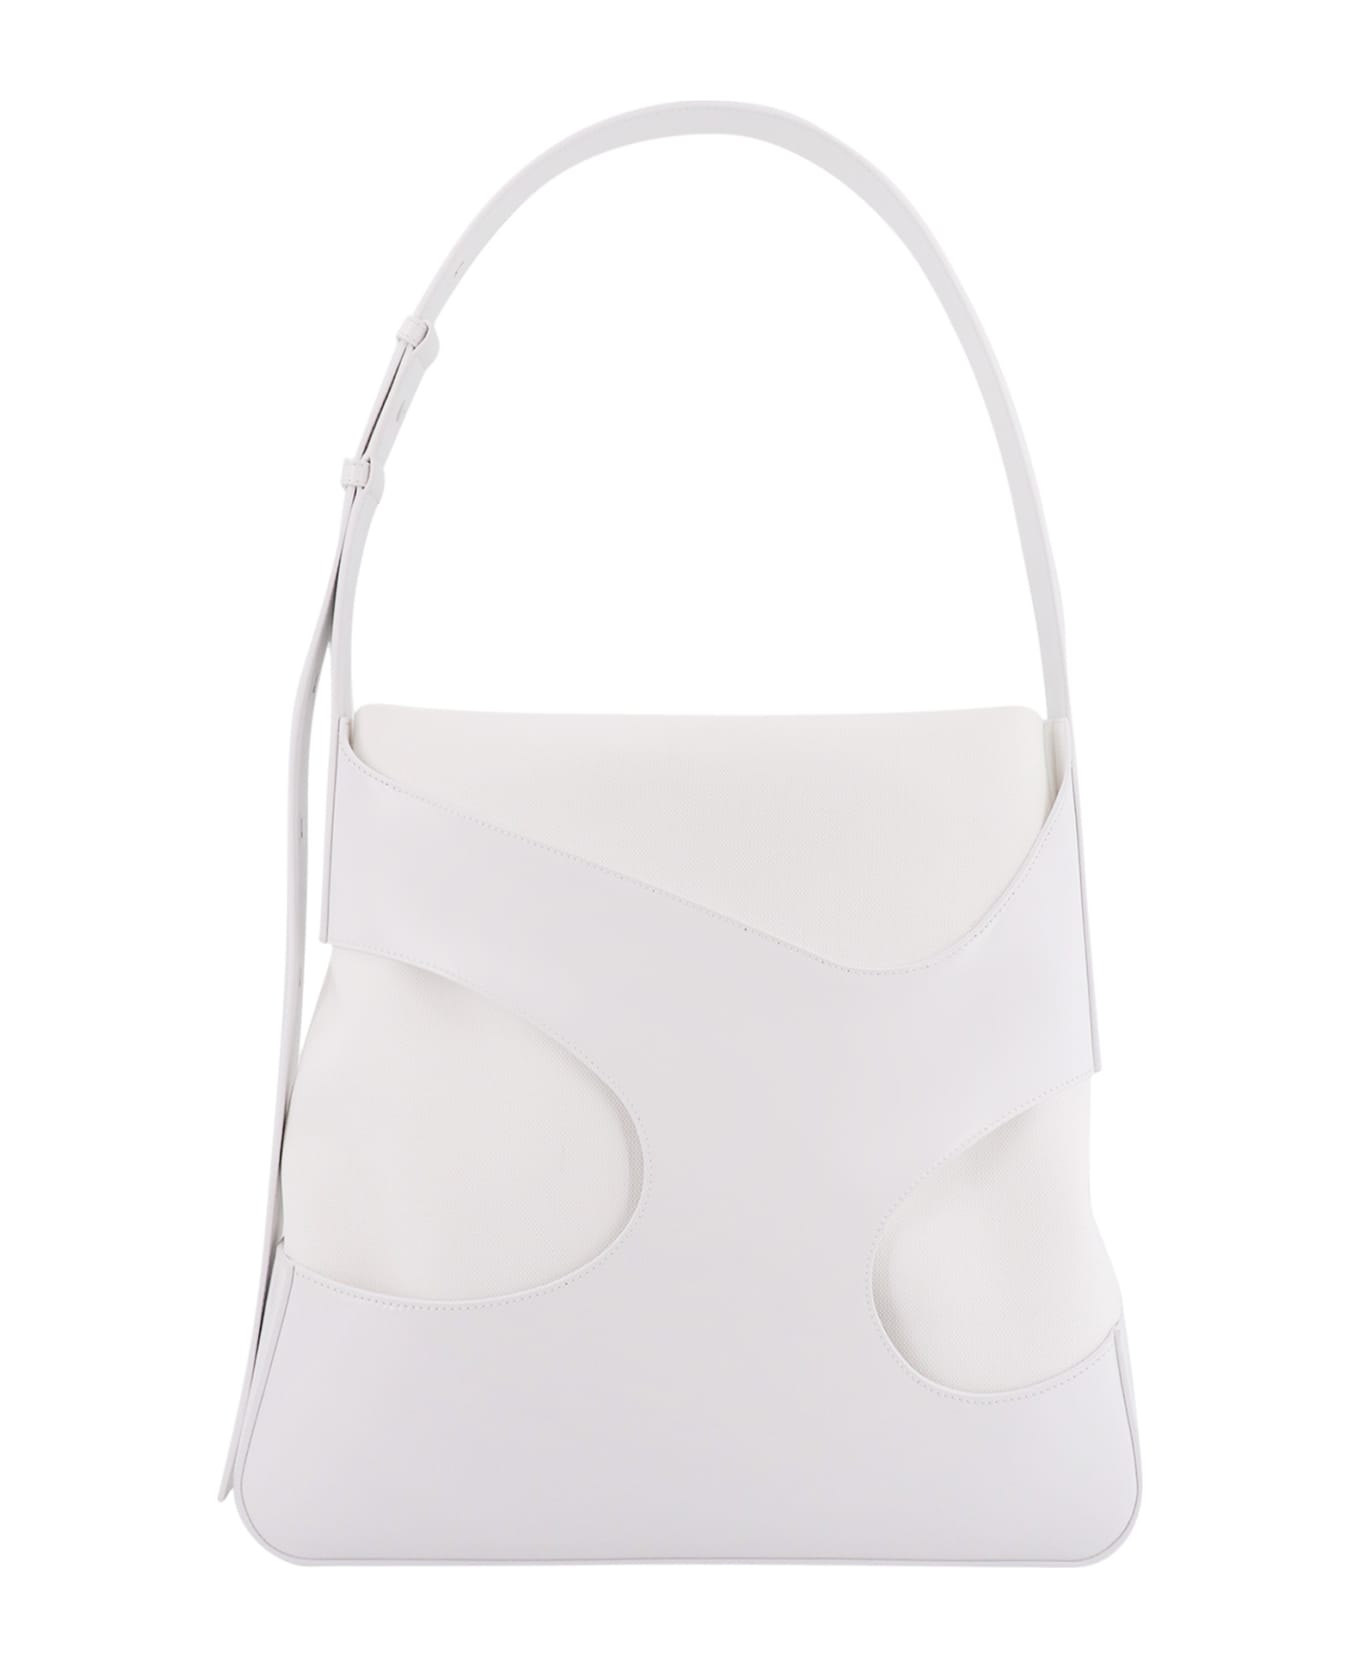 Ferragamo Shoulder Bag - White